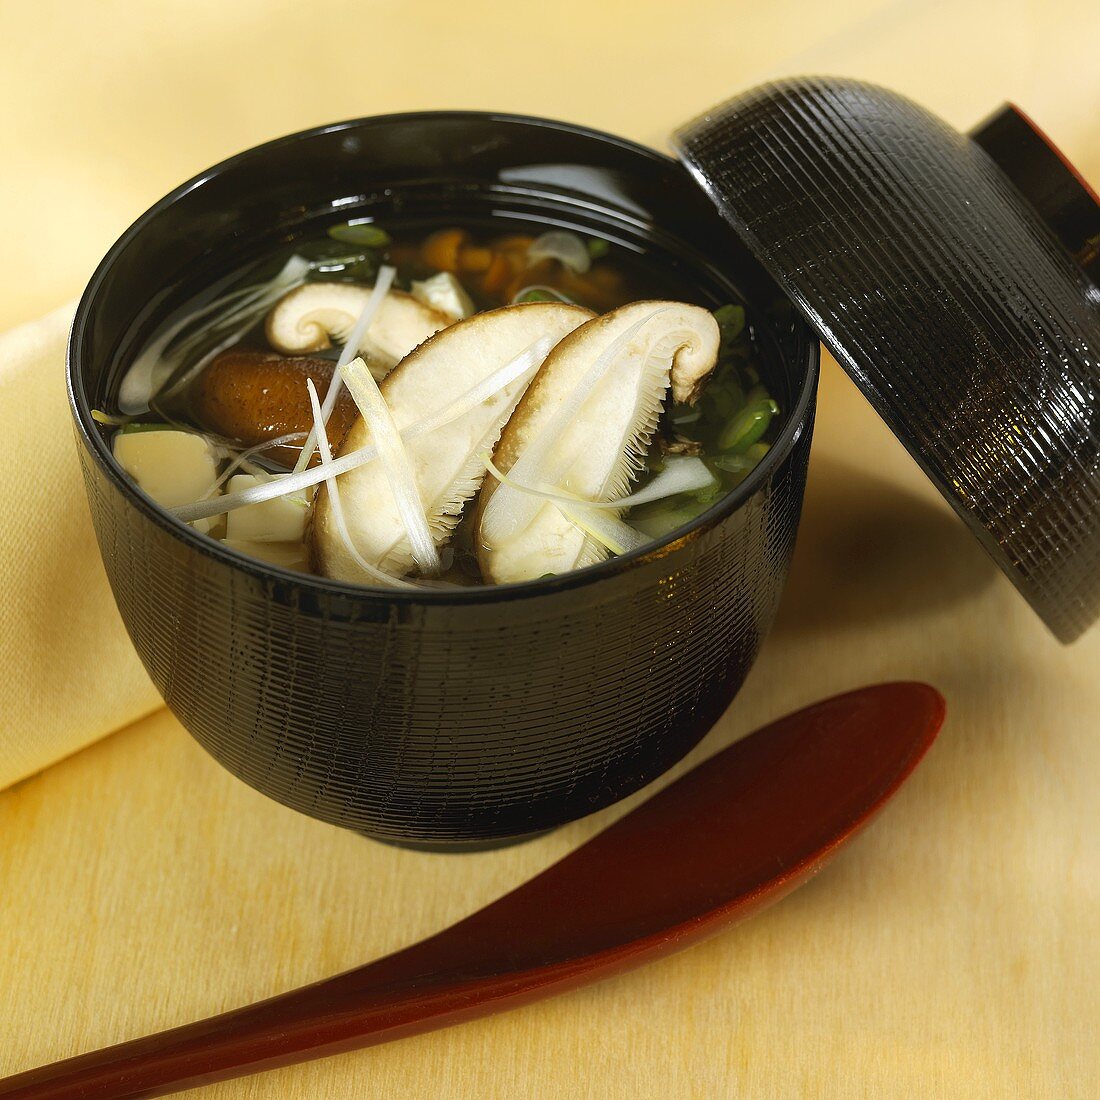 Miso soup with wakame seaweed and silken tofu (Japan)